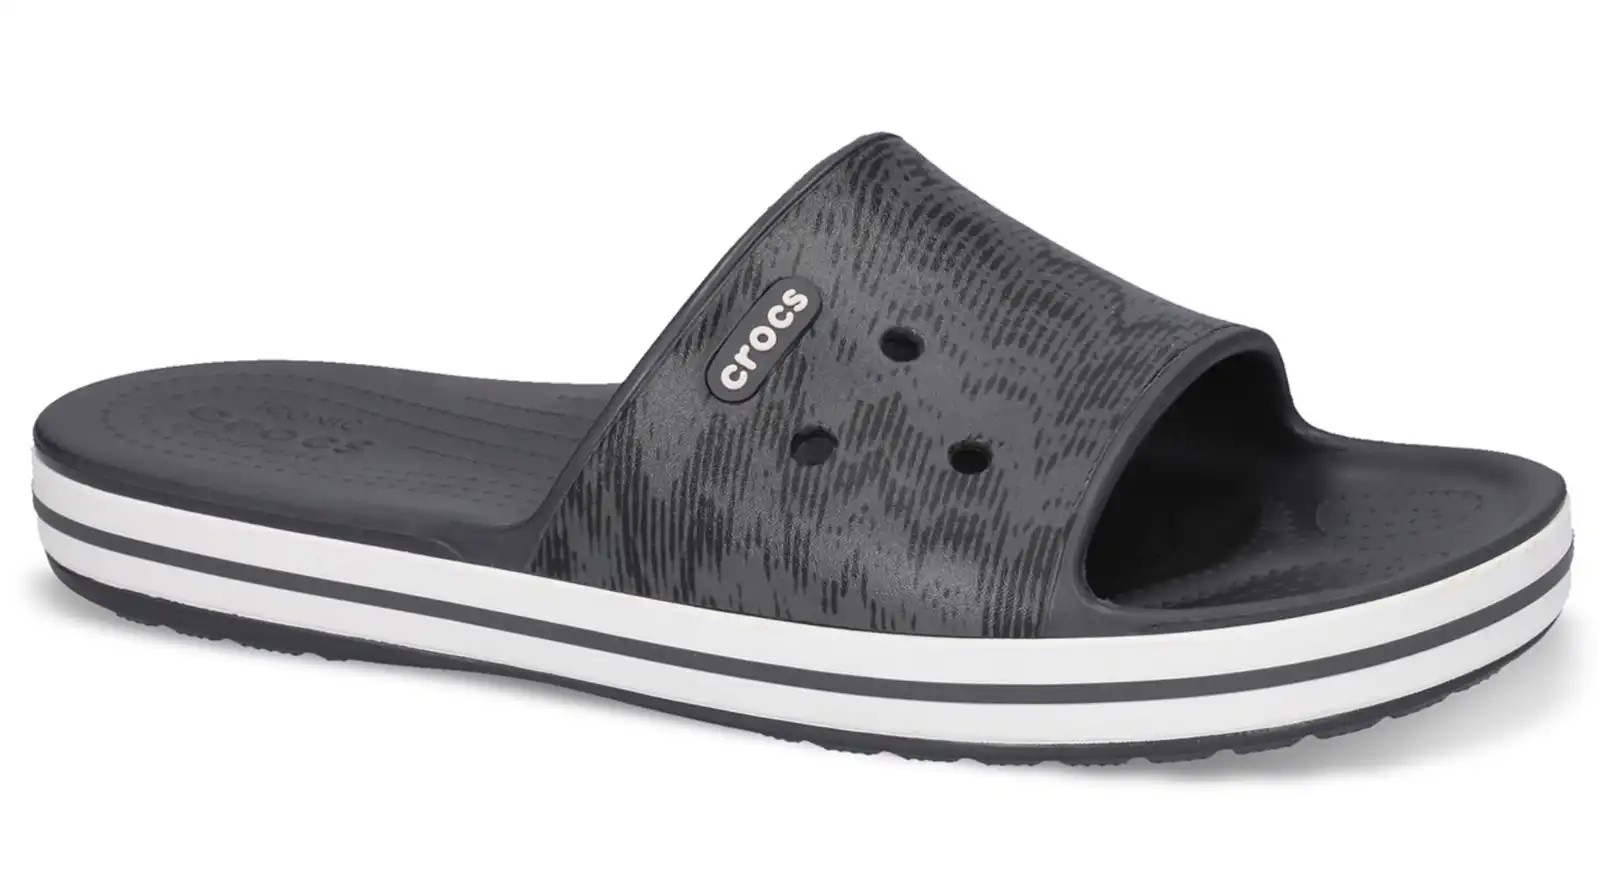 Crocs Crocband III Cardio Wave Slide Thongs Flip Flops Relaxed Fit - Graphite/Black